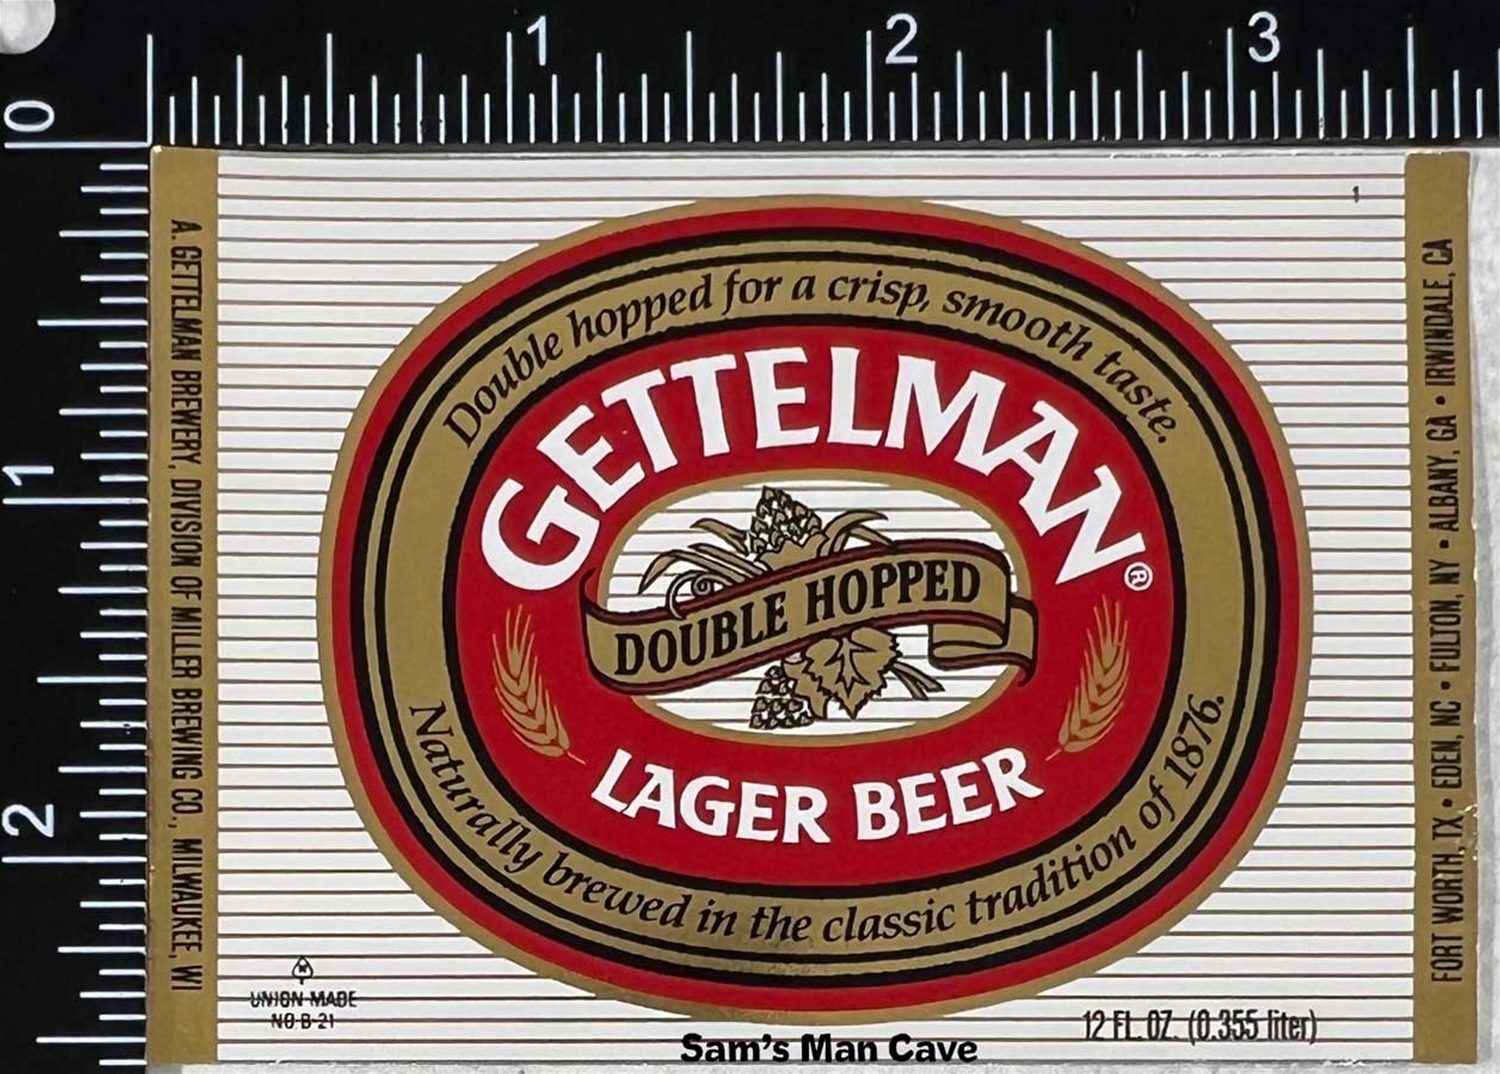 Gettelman Lager Beer Label